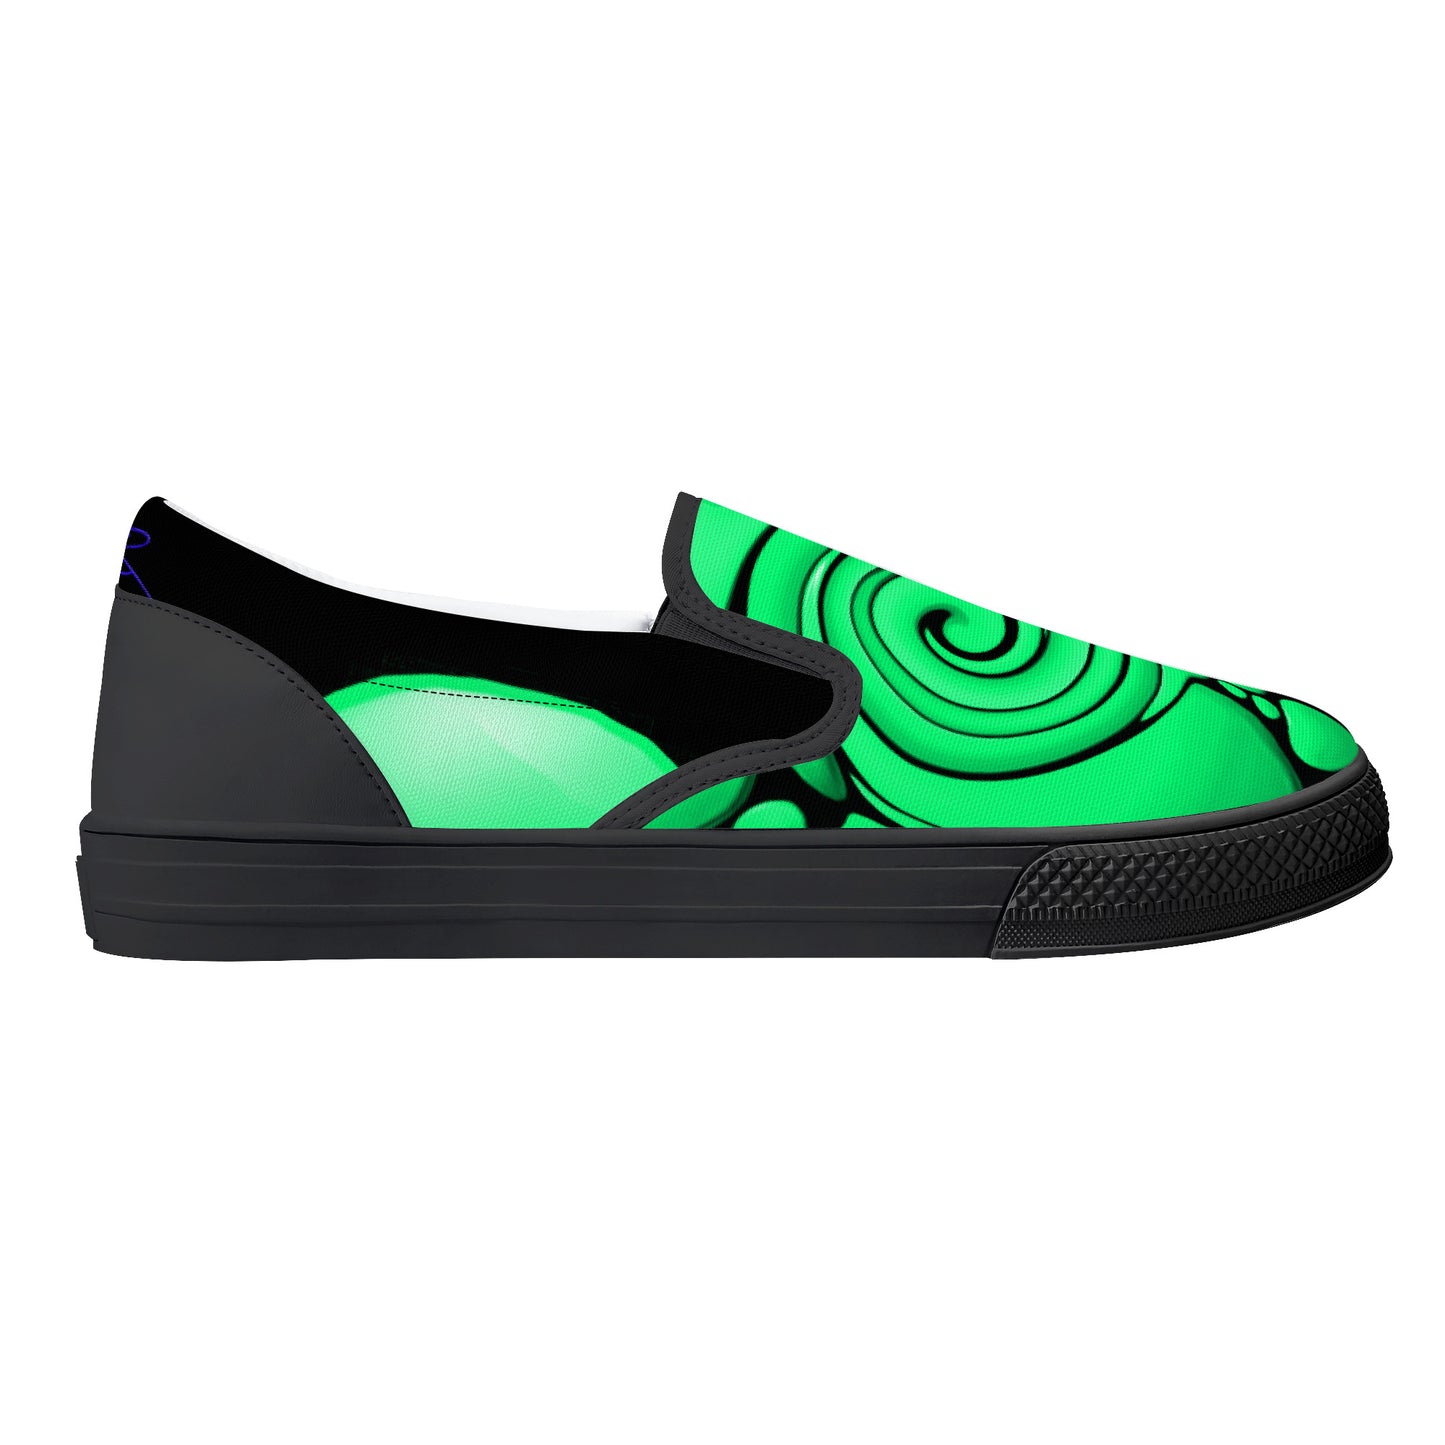 Green Twisted Ellipses Slip-on Shoes Black